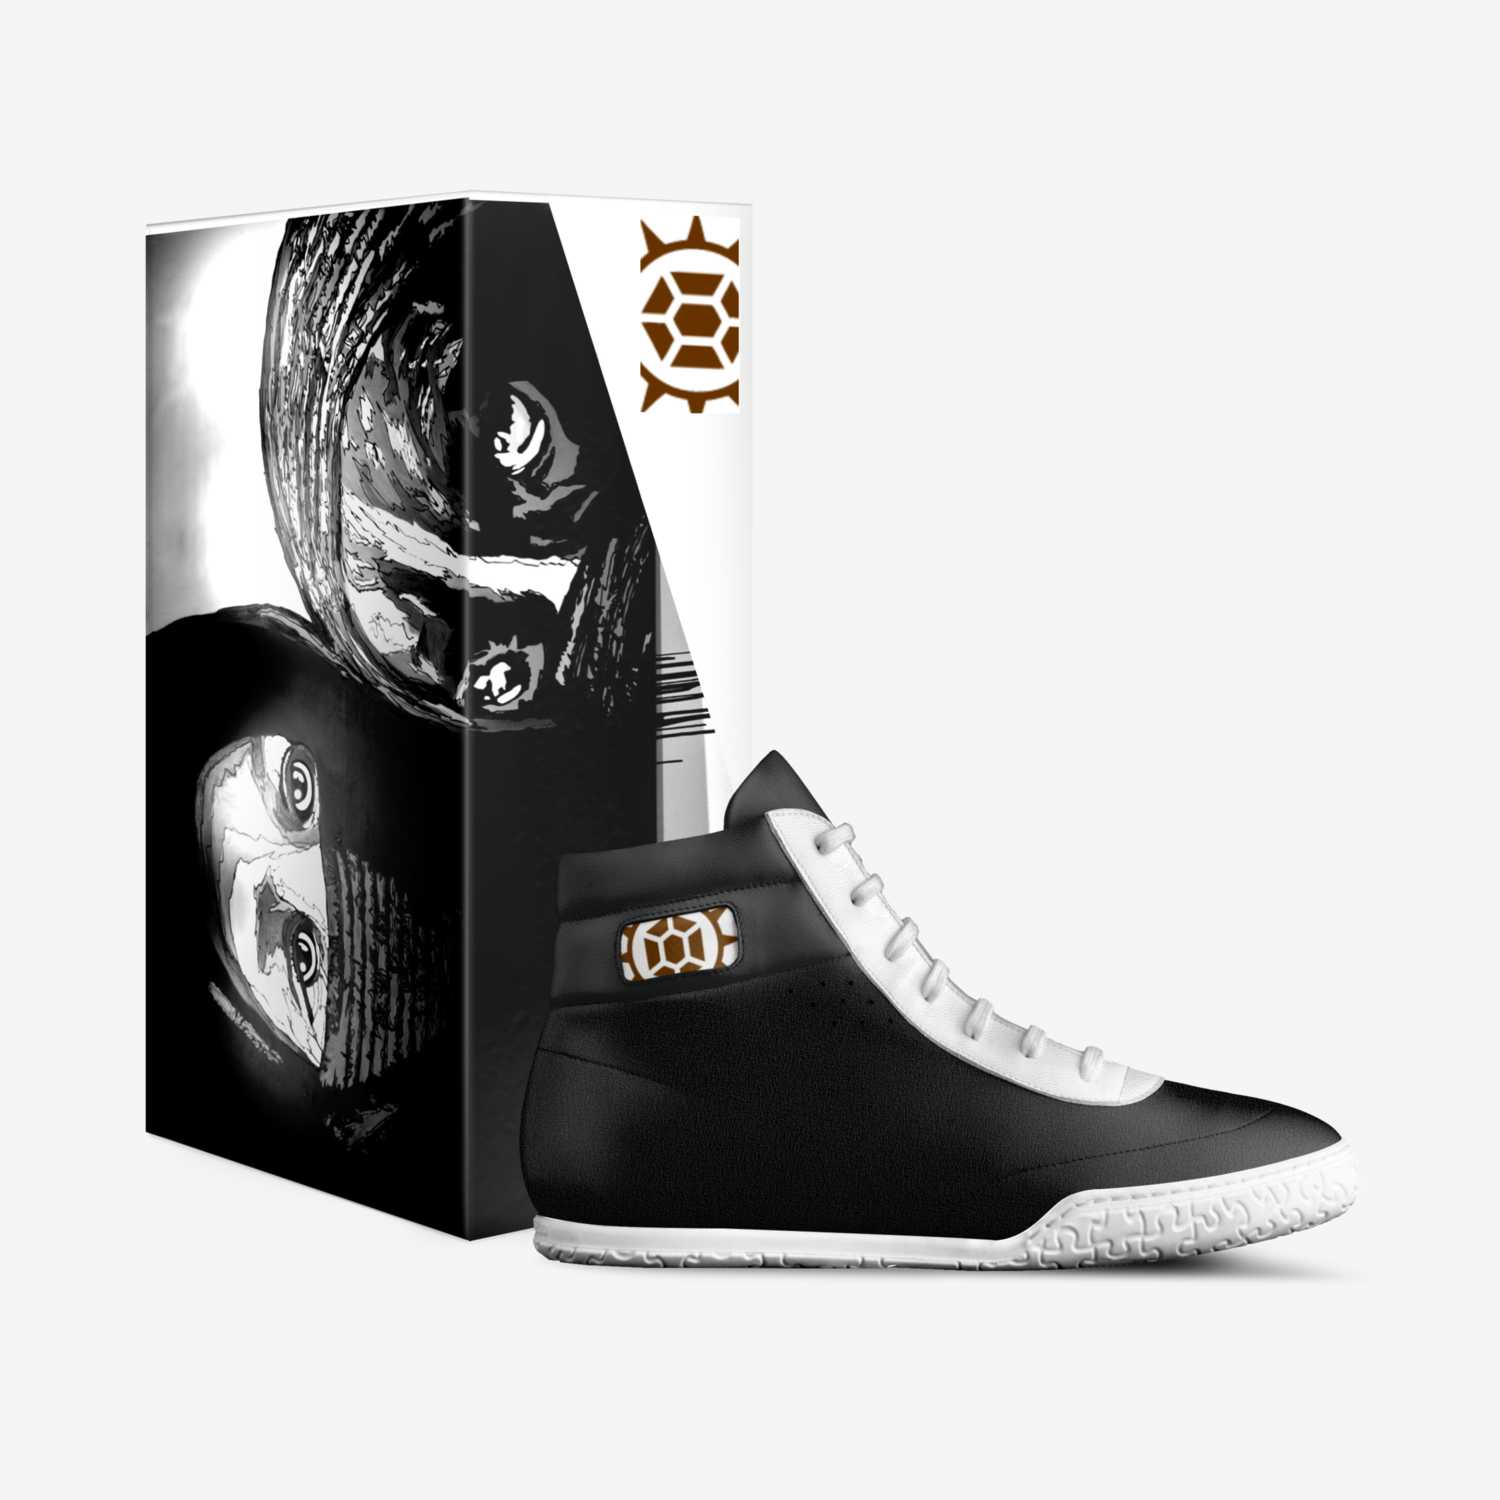 alo  A Custom Shoe concept by John Q